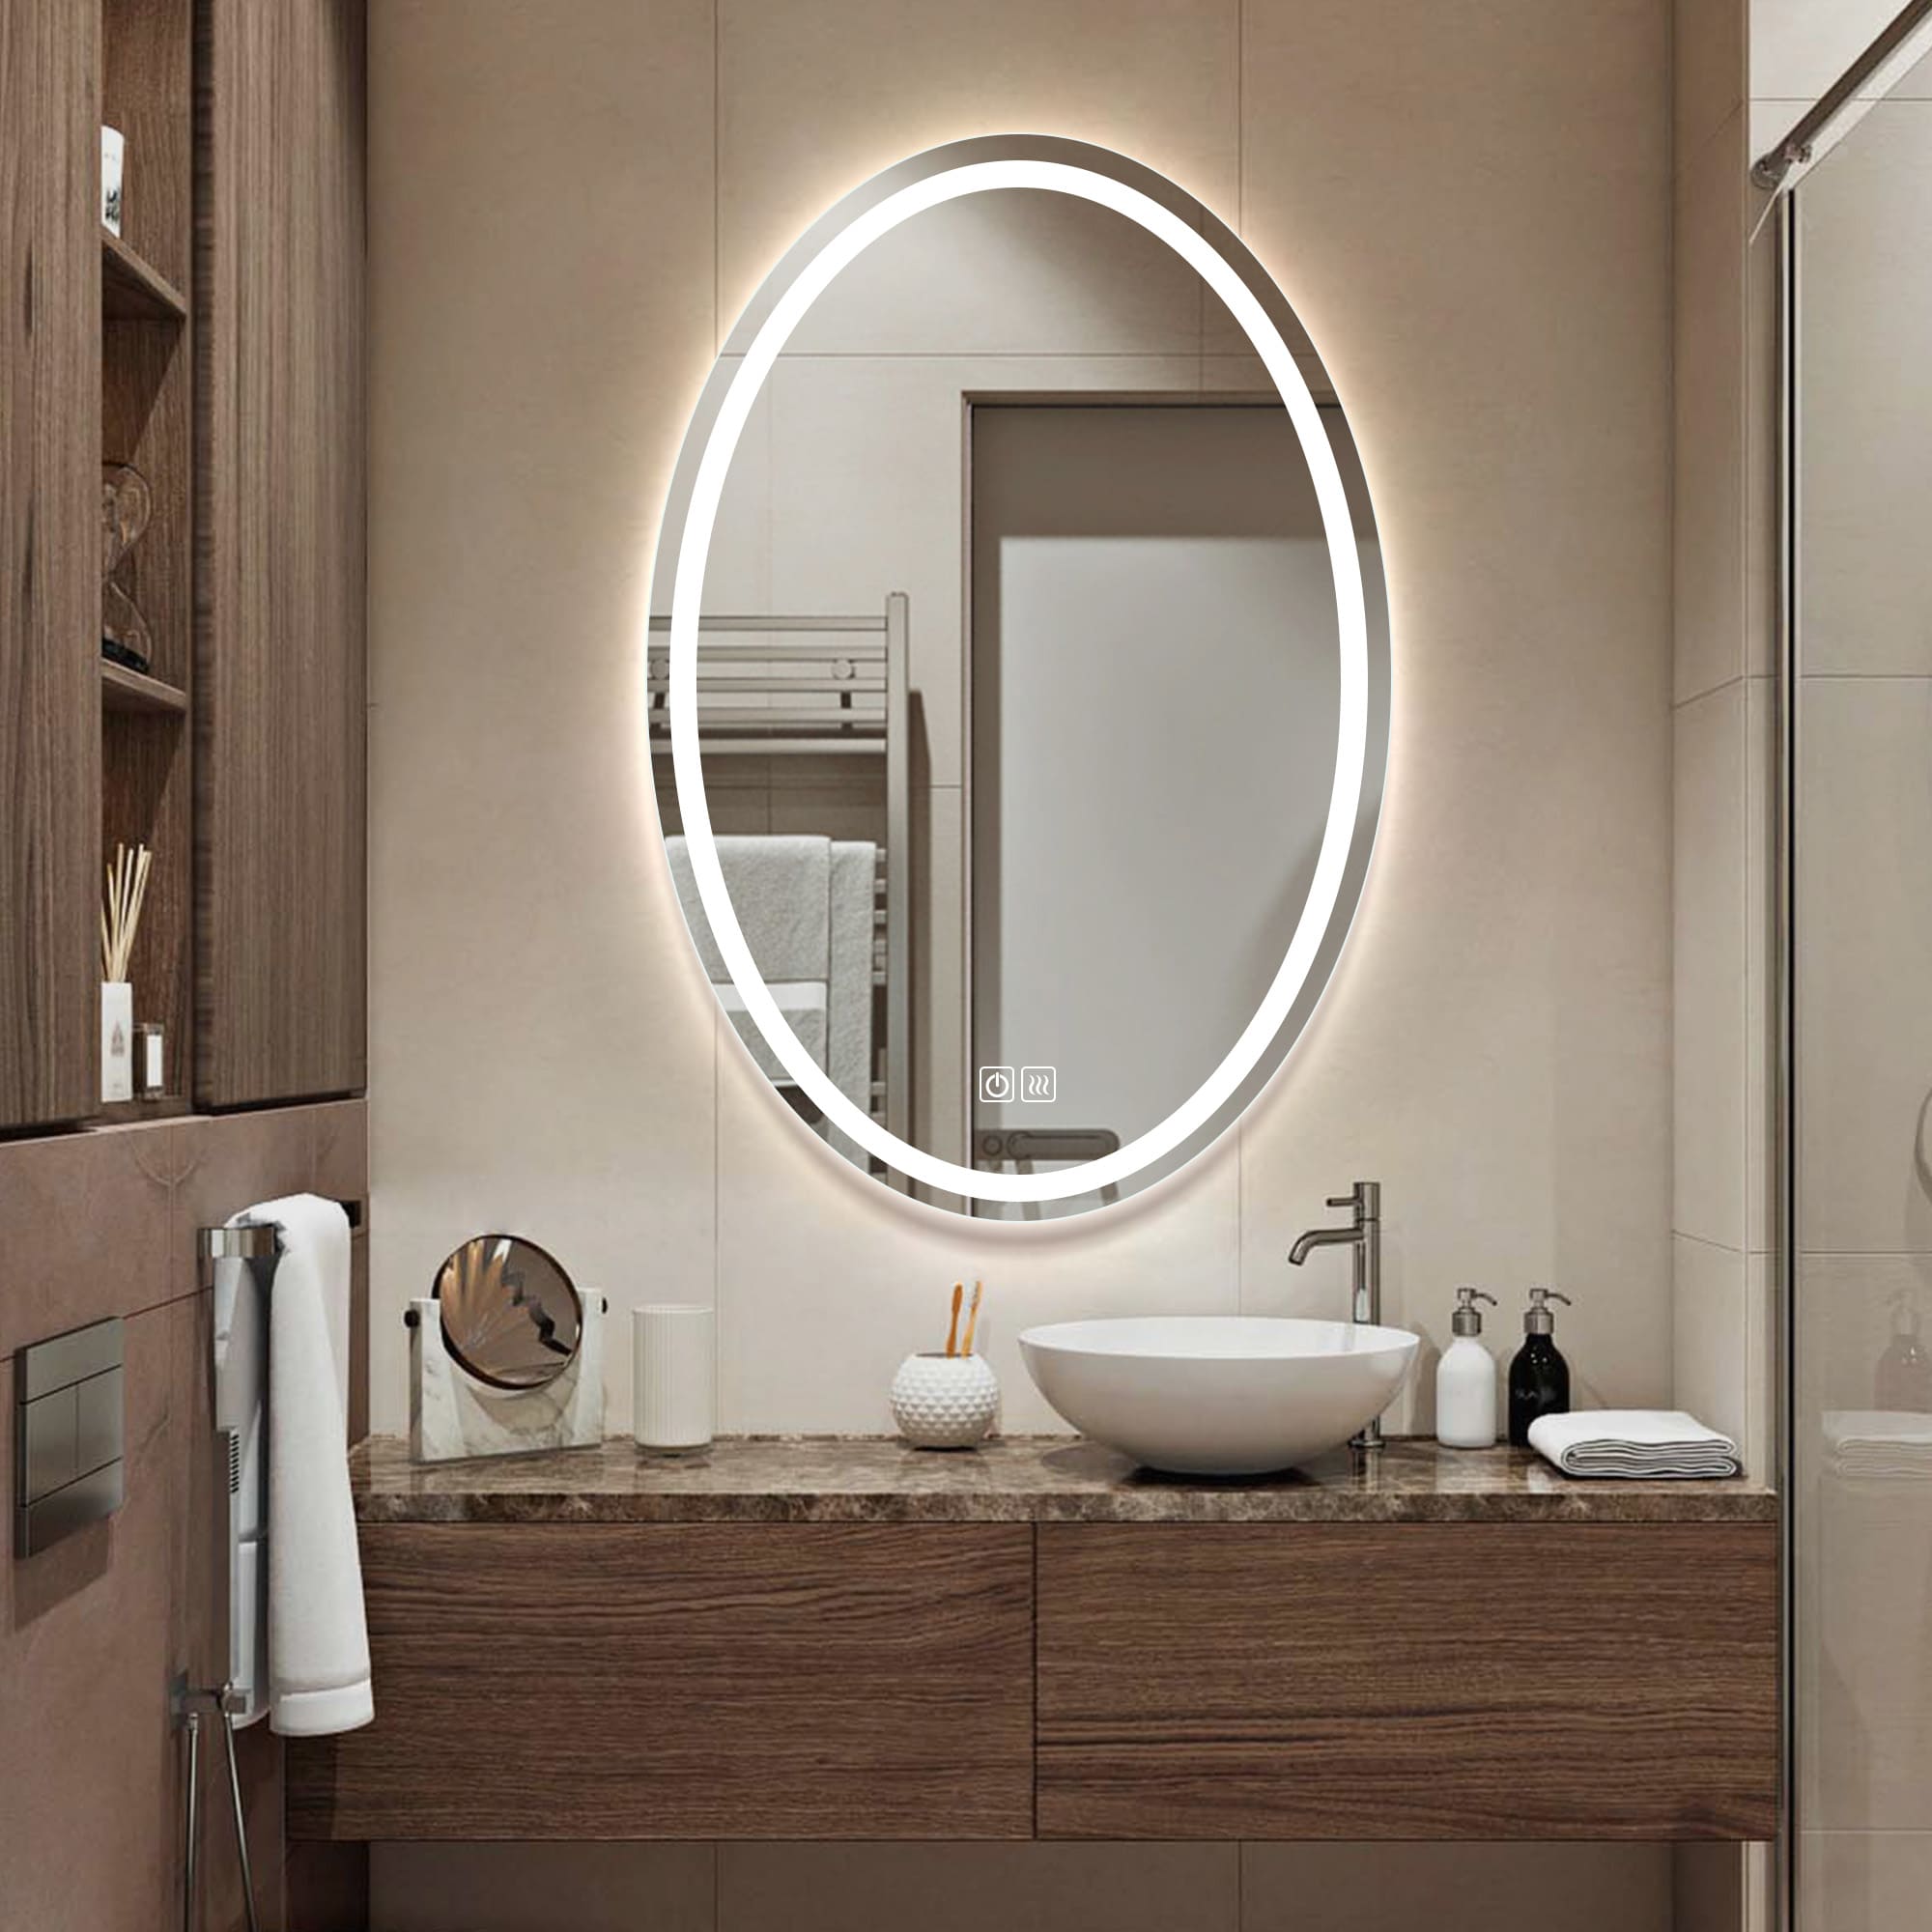 Pluto LED Mirror for bathroom